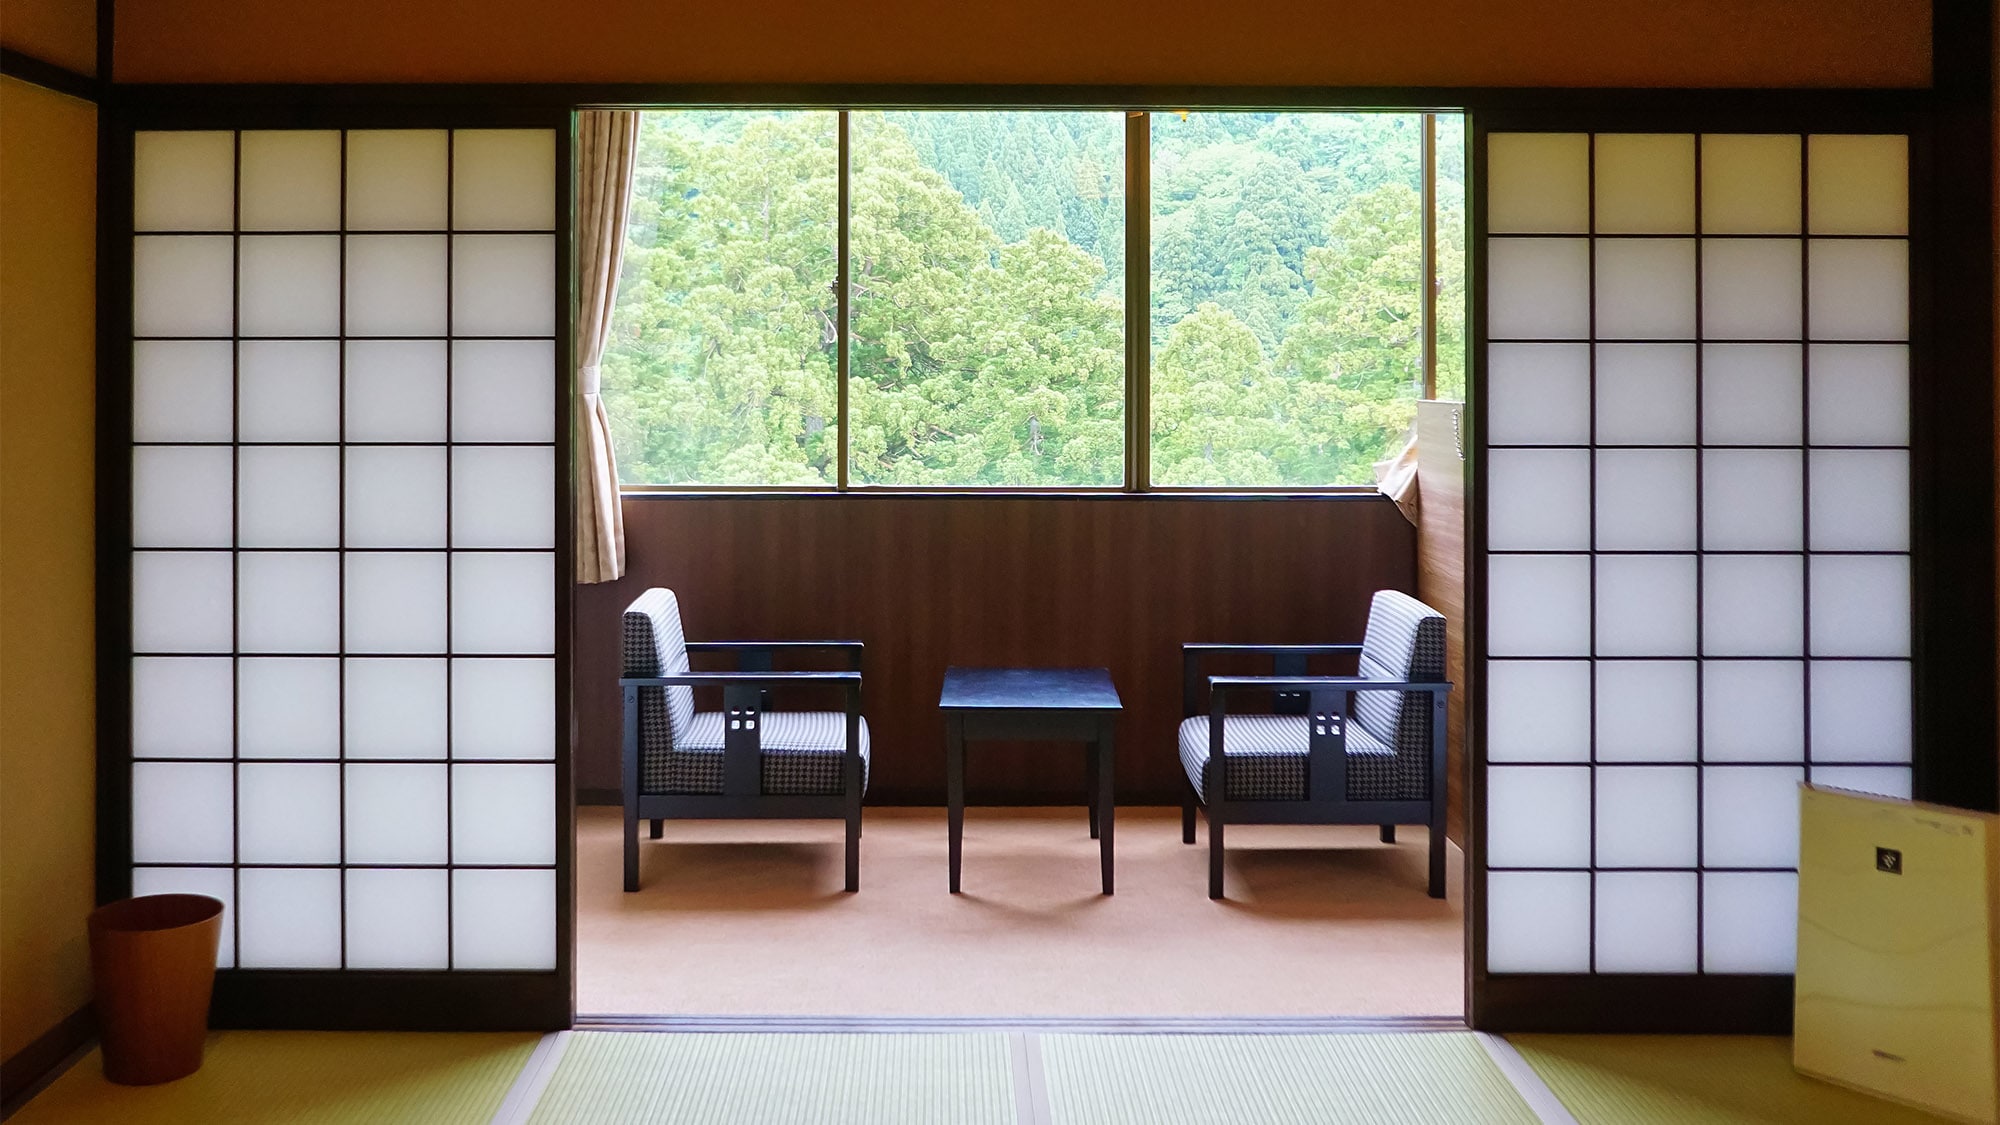 ・Japanese style room 10 tatami mats